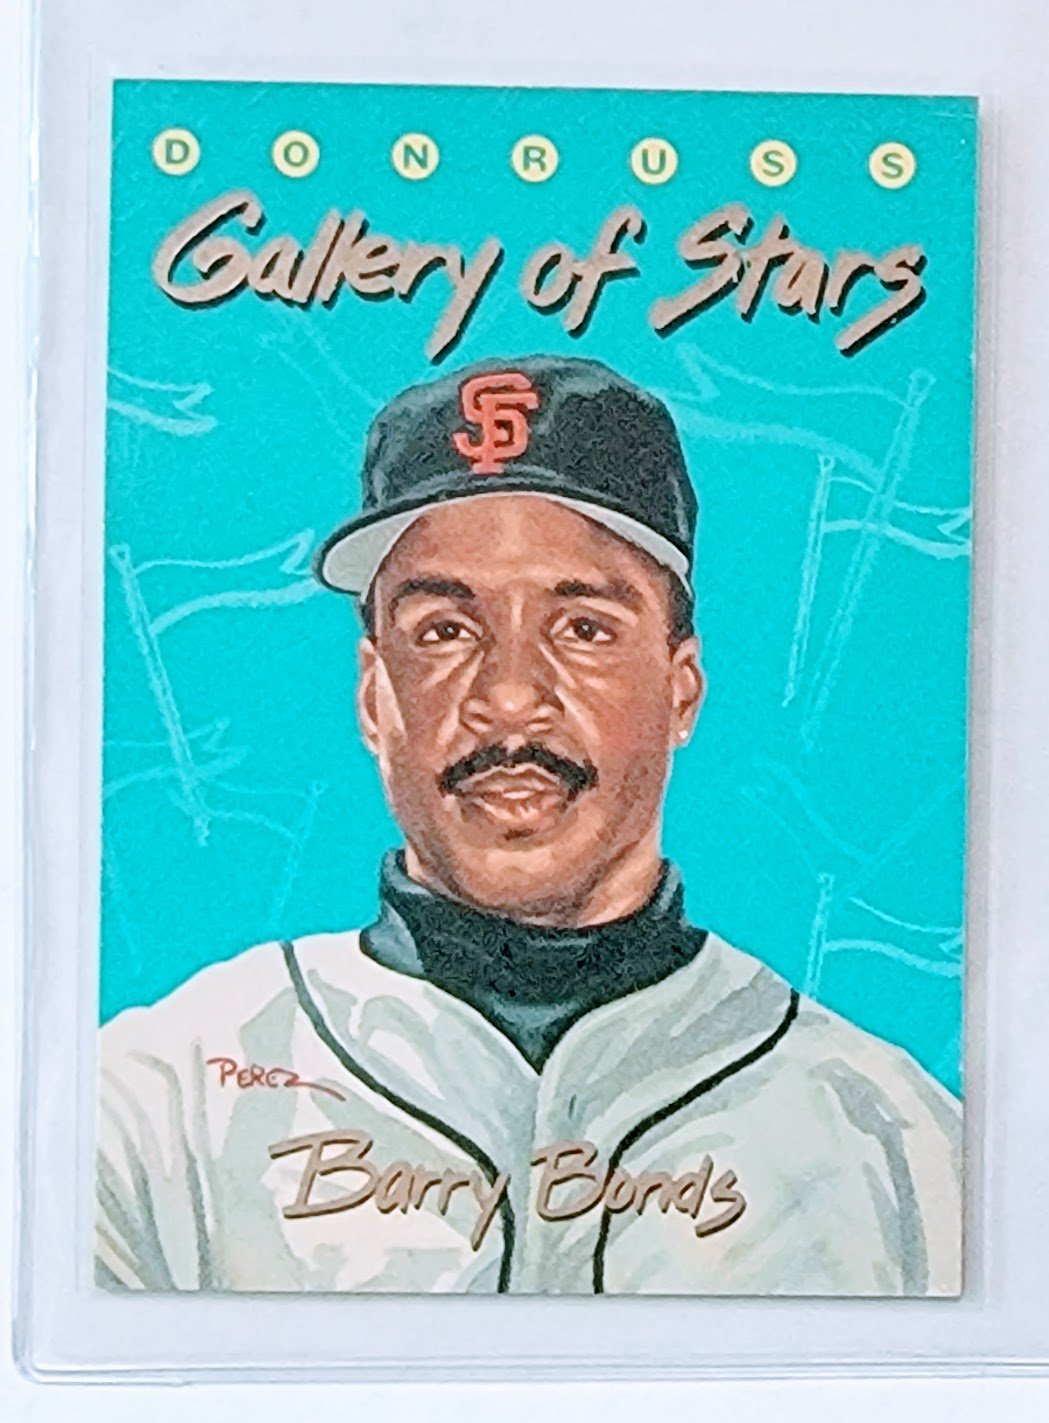 1993 Donruss Barry Bonds Diamond Kings Baseball Trading Card TPTV simple Xclusive Collectibles   